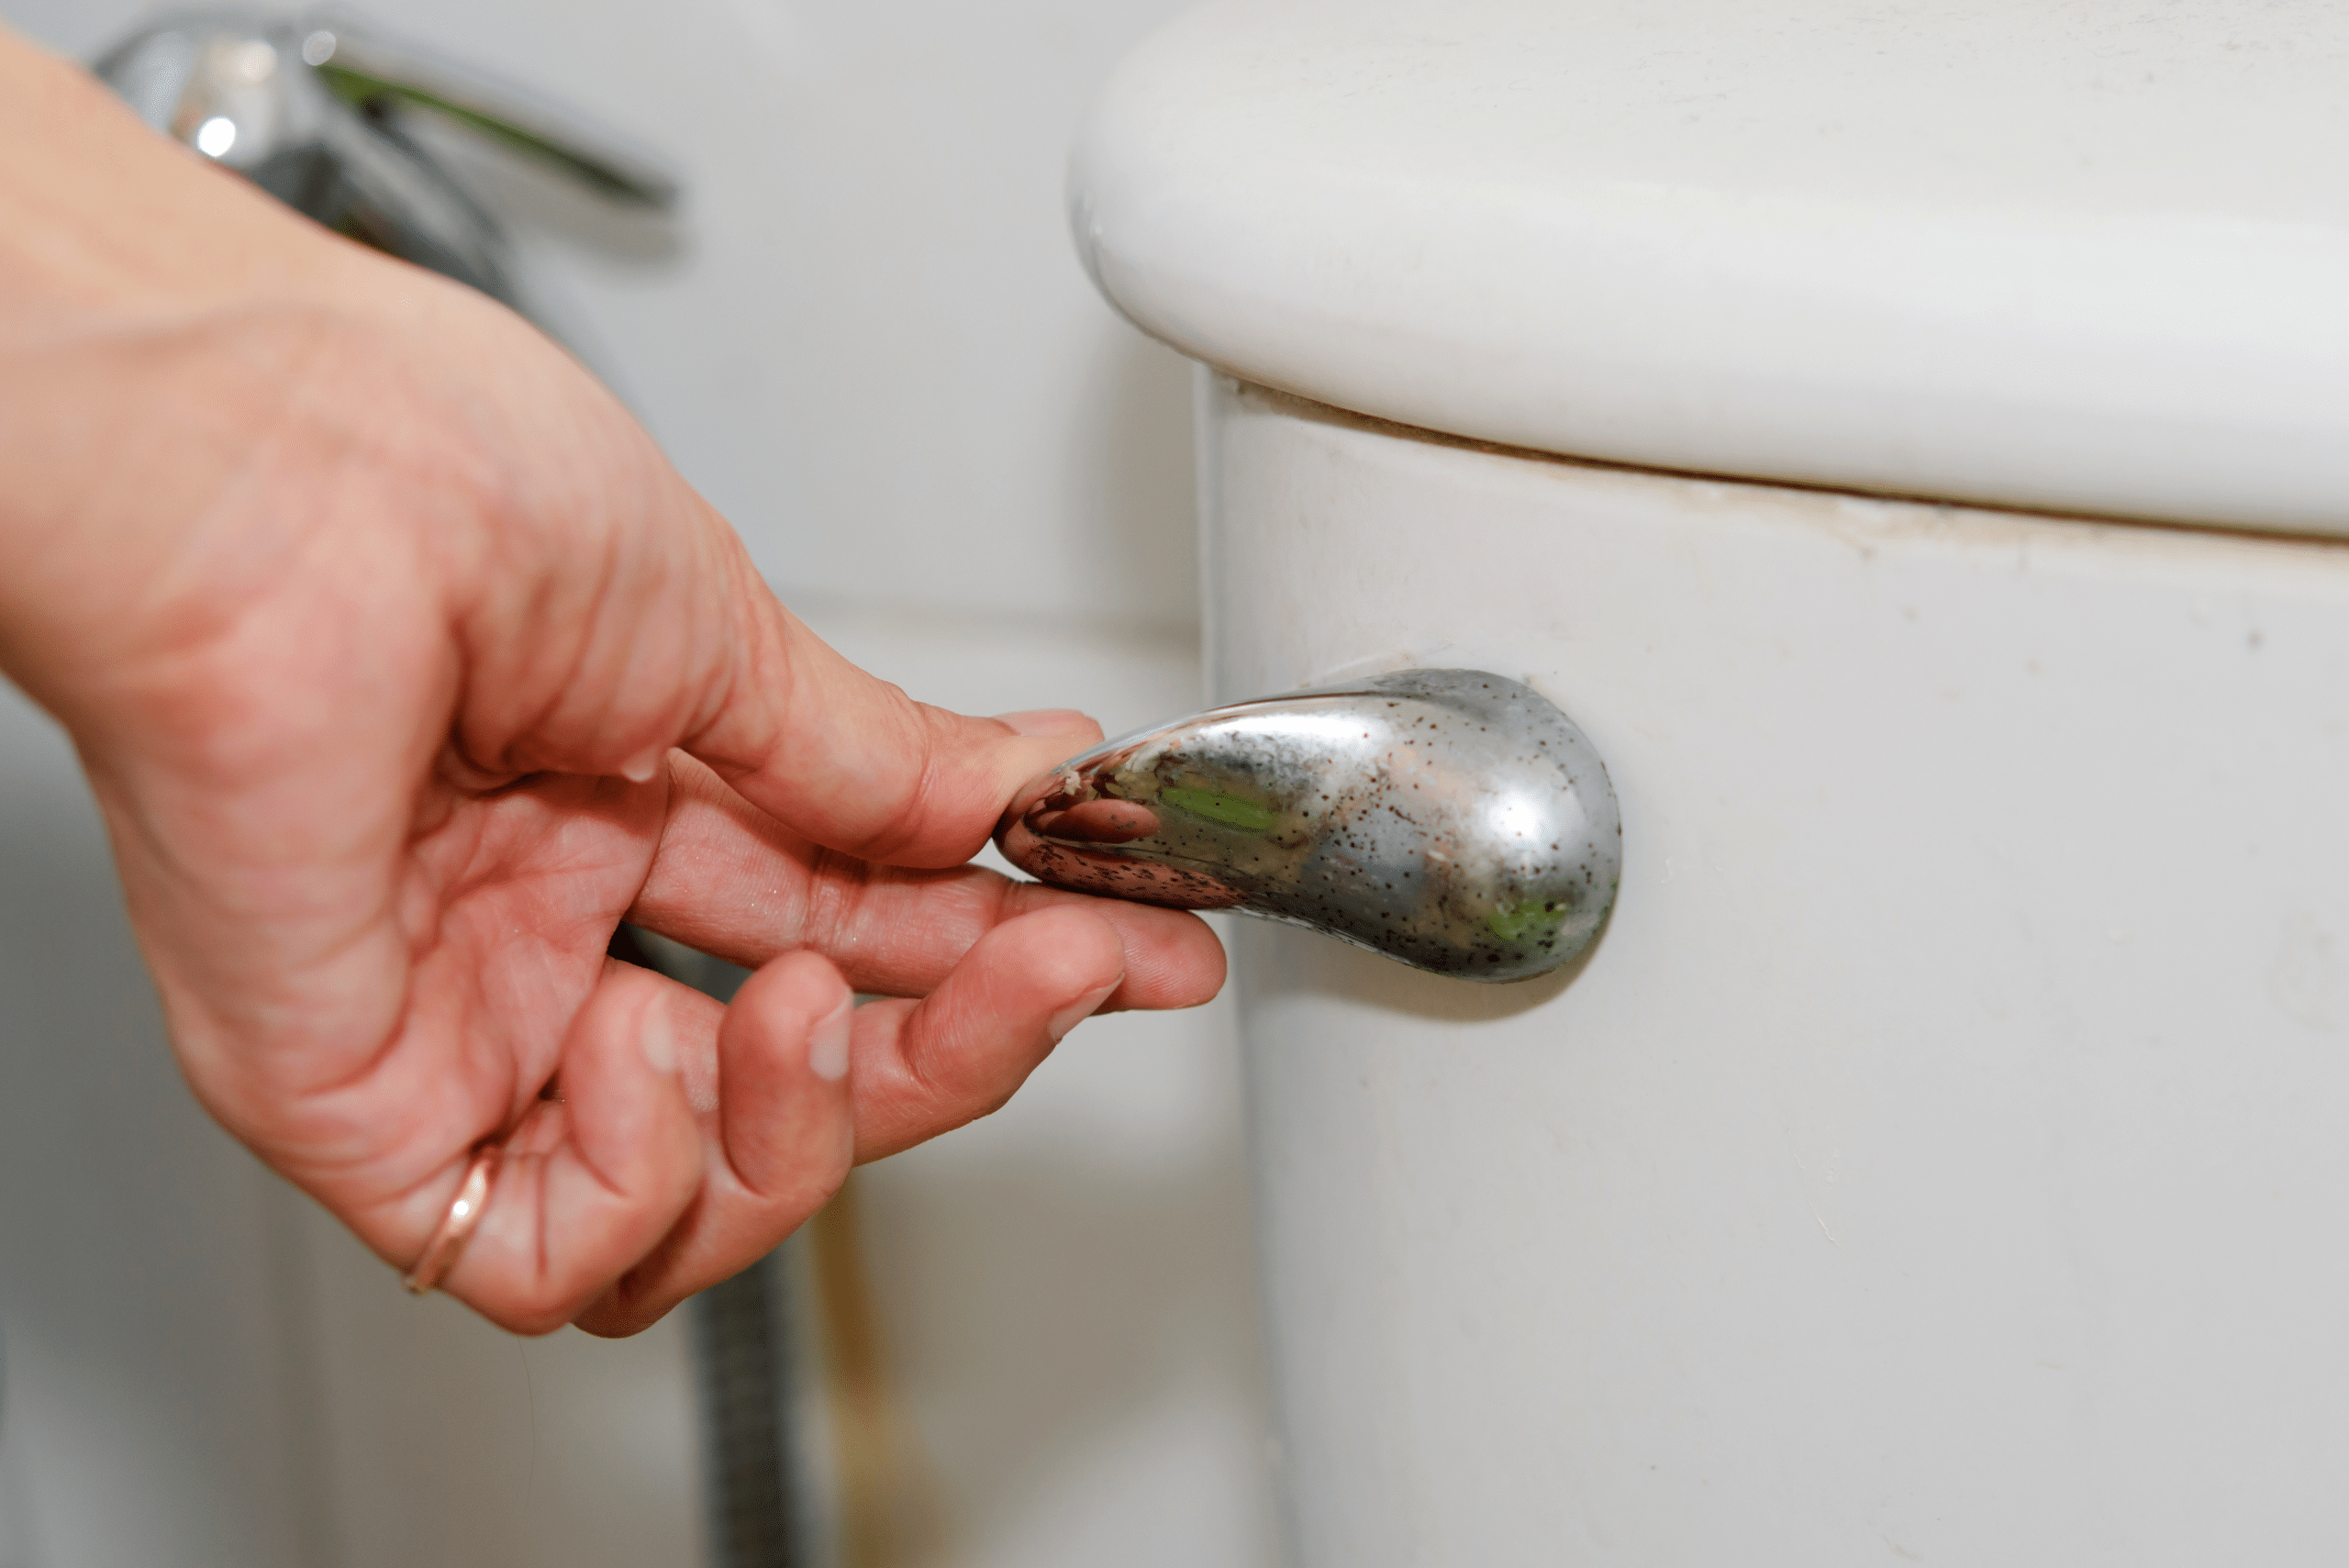 A closeup of a hand flushing toilet.